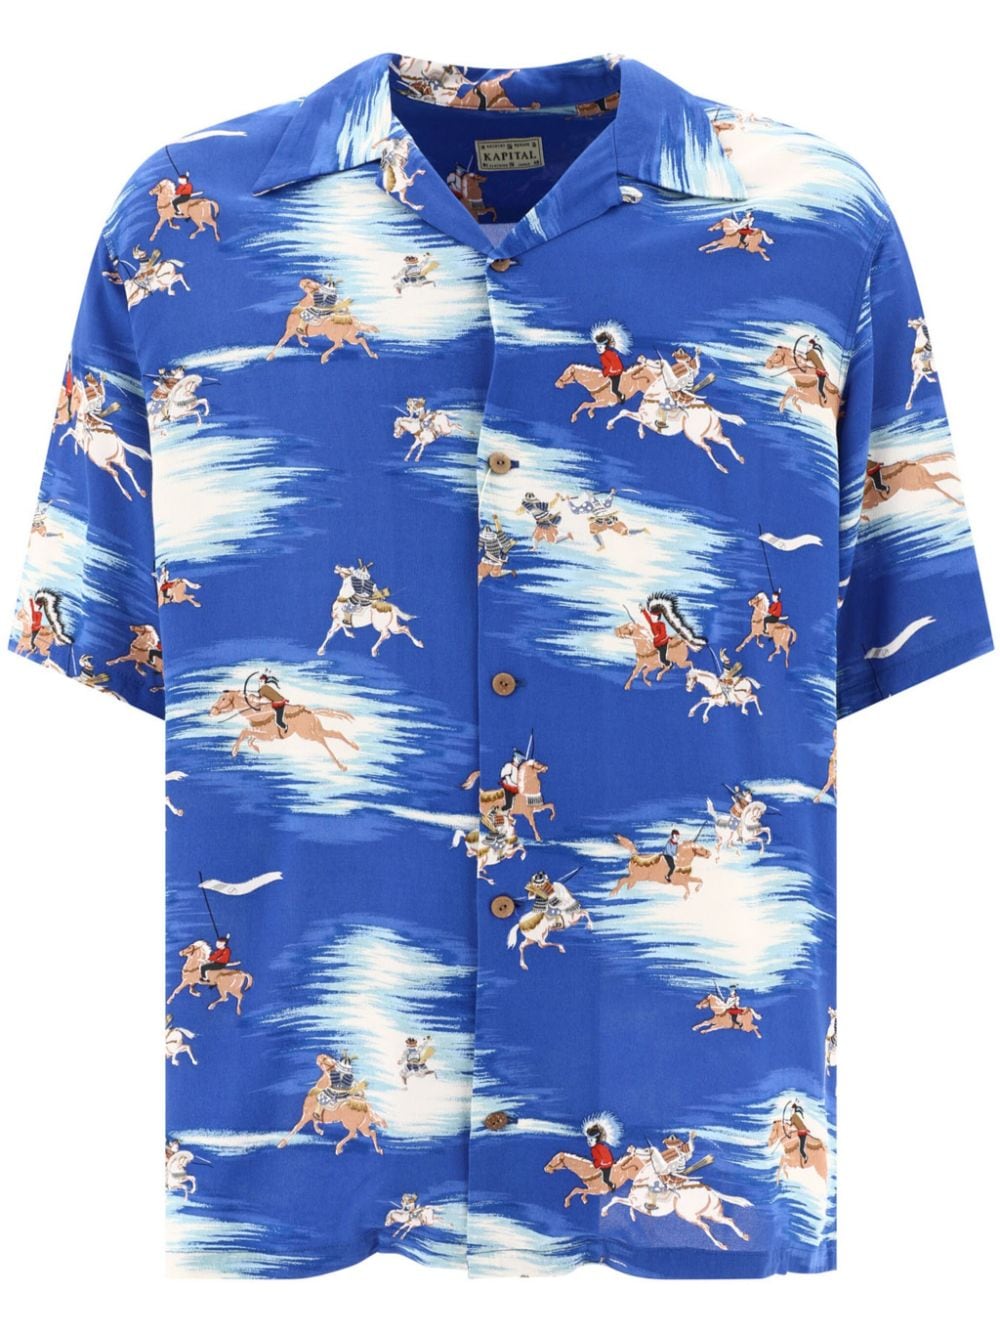 KAPITAL horse print buttoned shirt - Blue